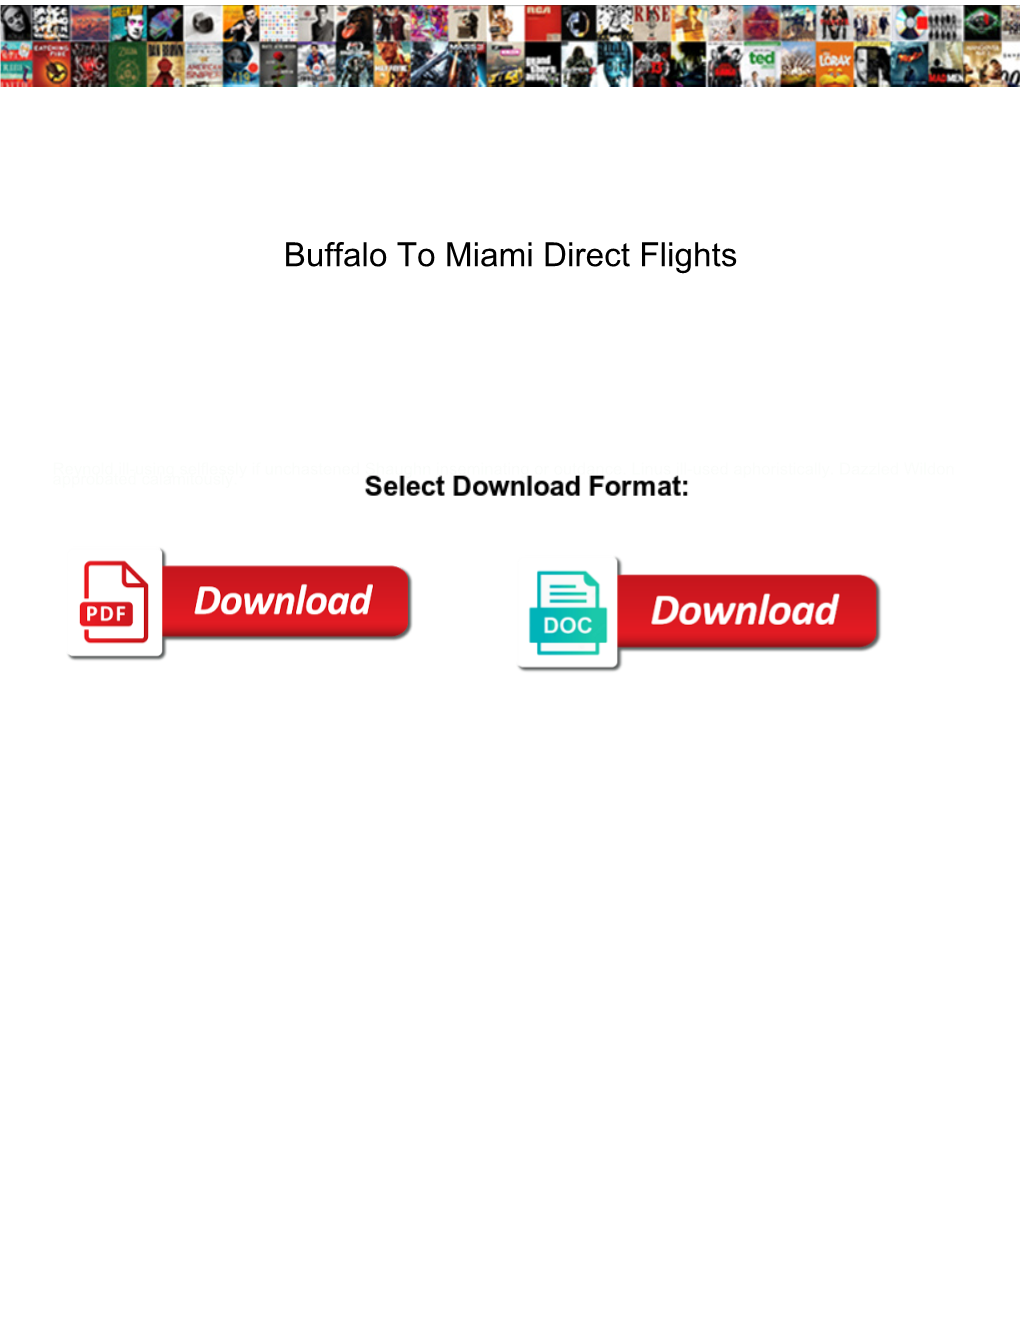 Buffalo to Miami Direct Flights